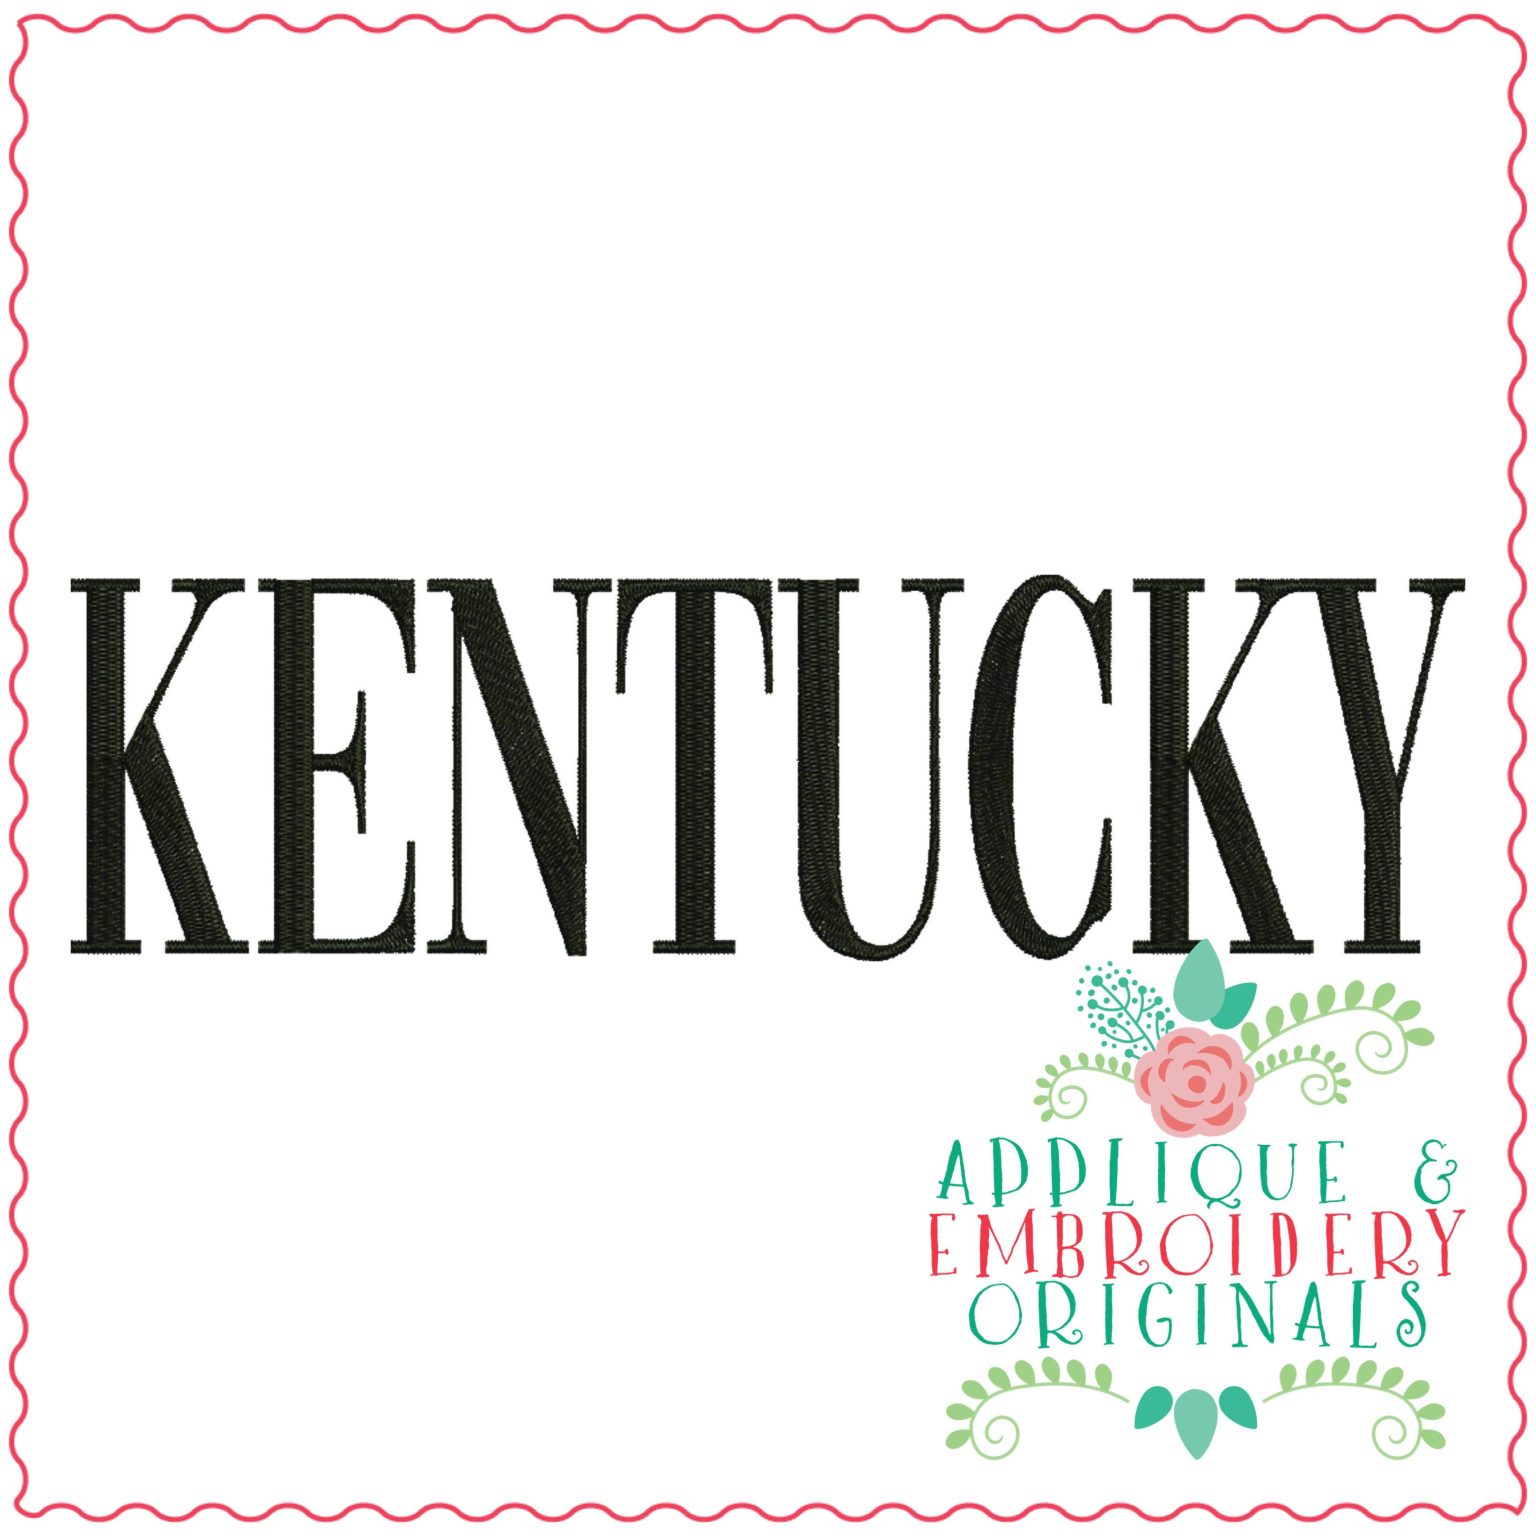 3316 Kentucky Embroidery Design - Applique & Embroidery Originals